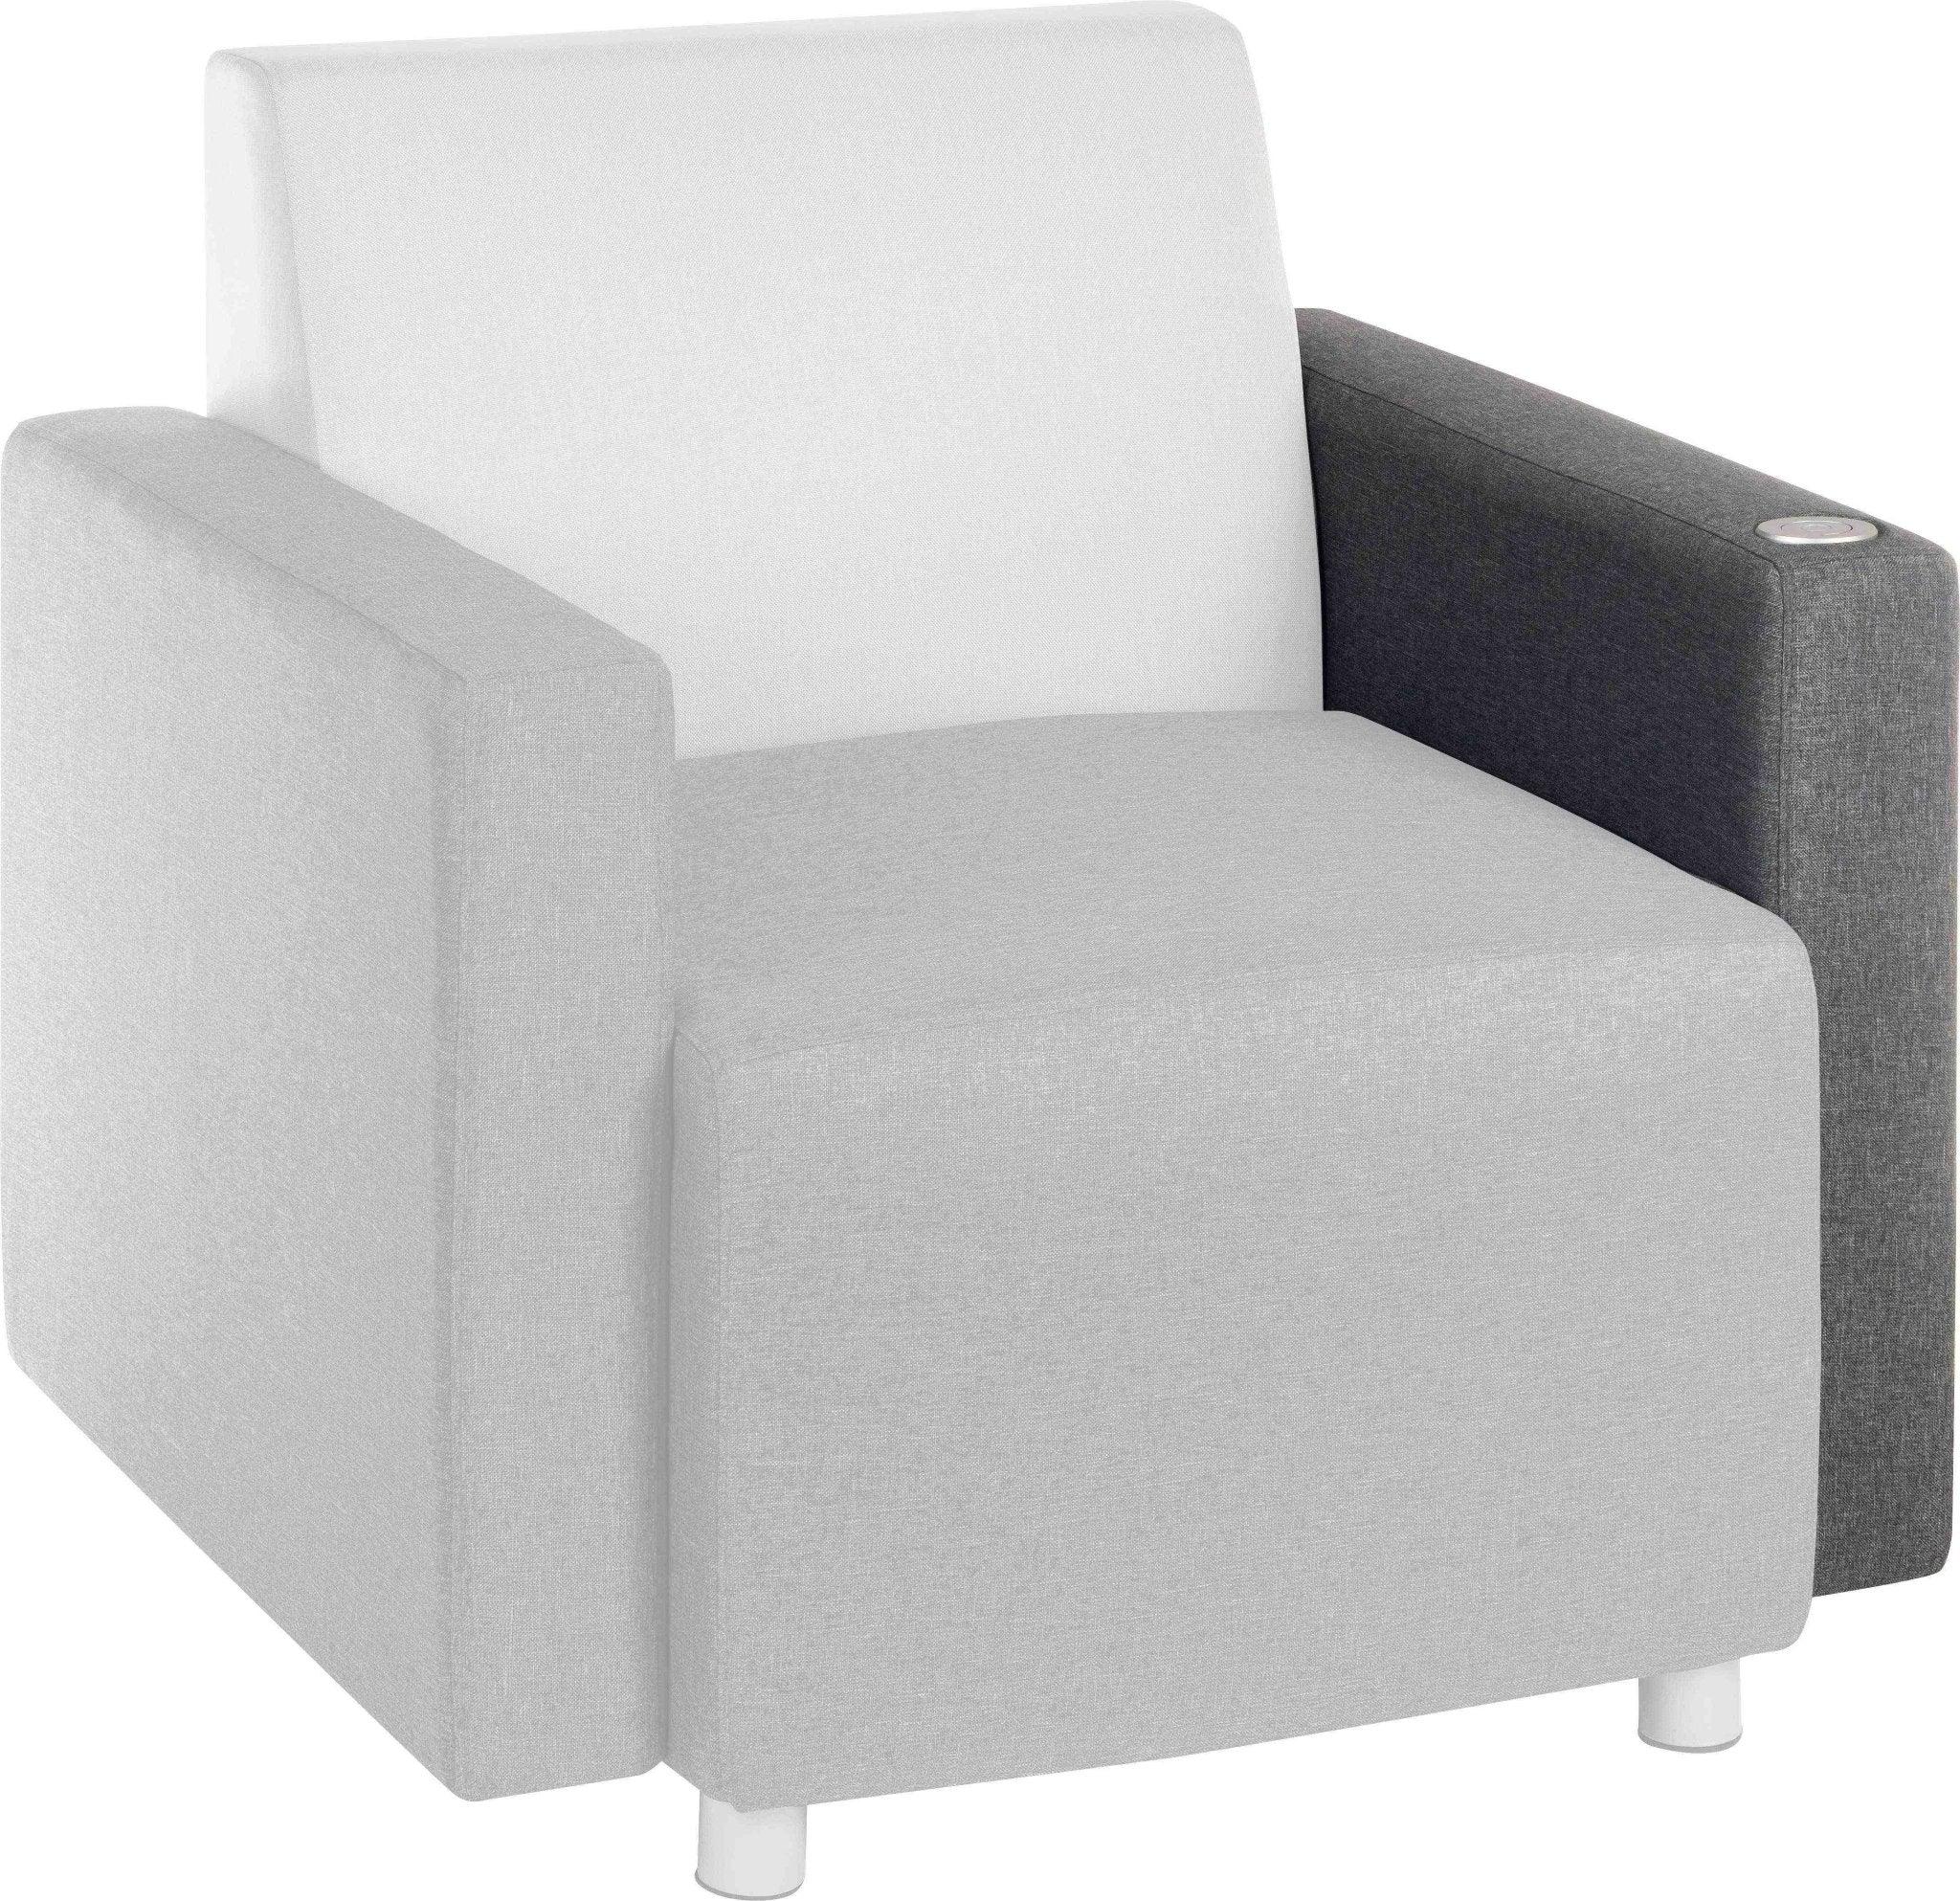 Cube modular reception chair usb arm left - image 1